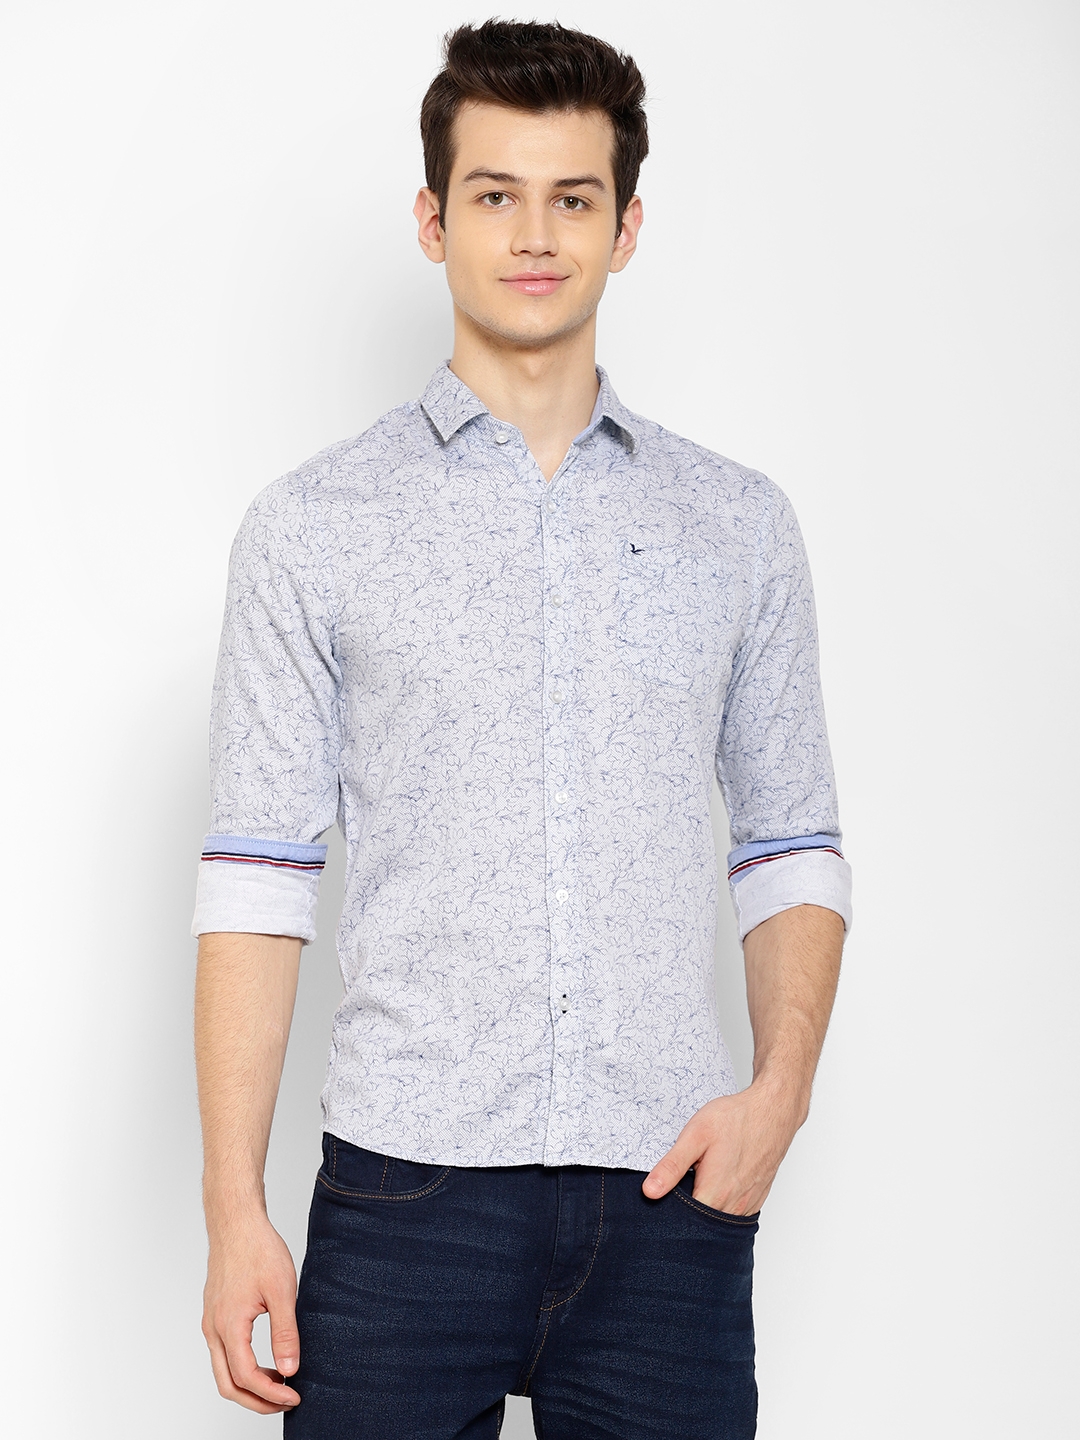 Cape Canary | Cape Canary Men's Cotton Blue Spread Collar Shirt